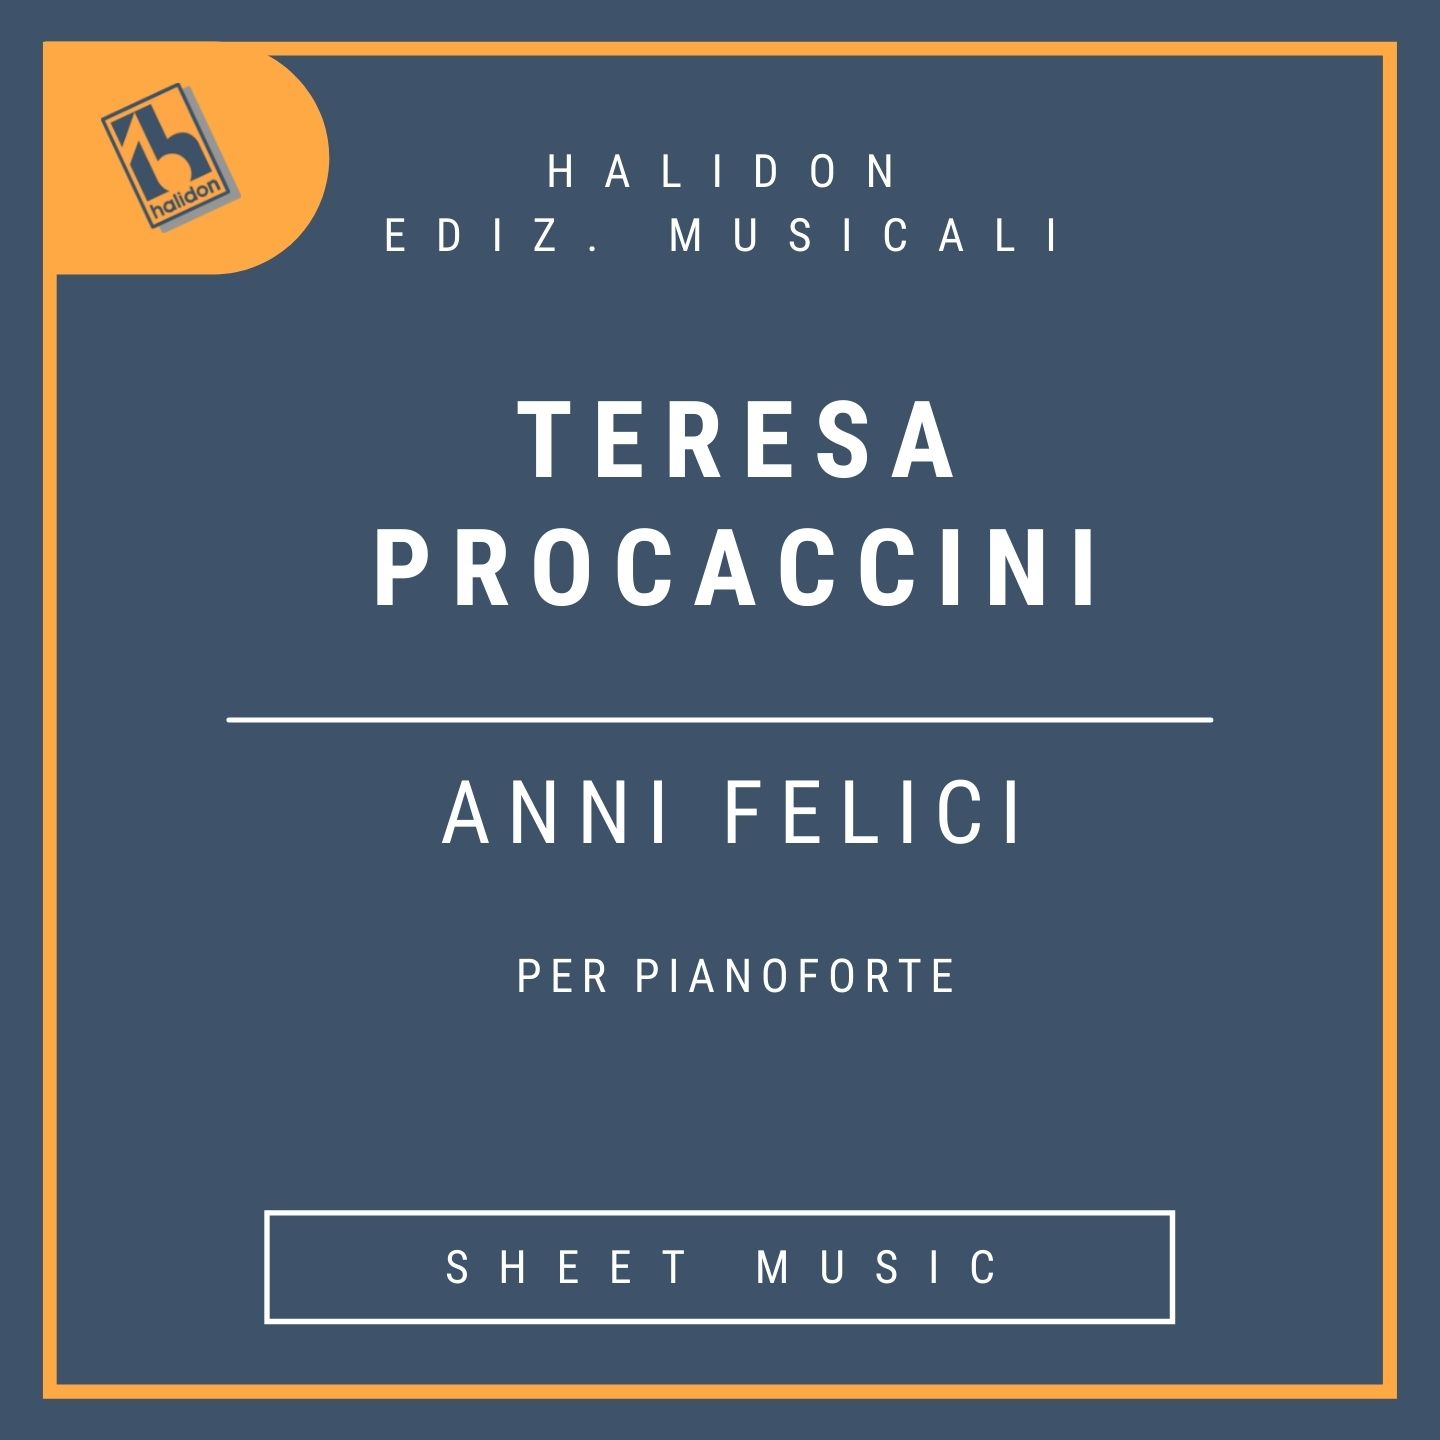 Teresa Procaccini - Anni felici